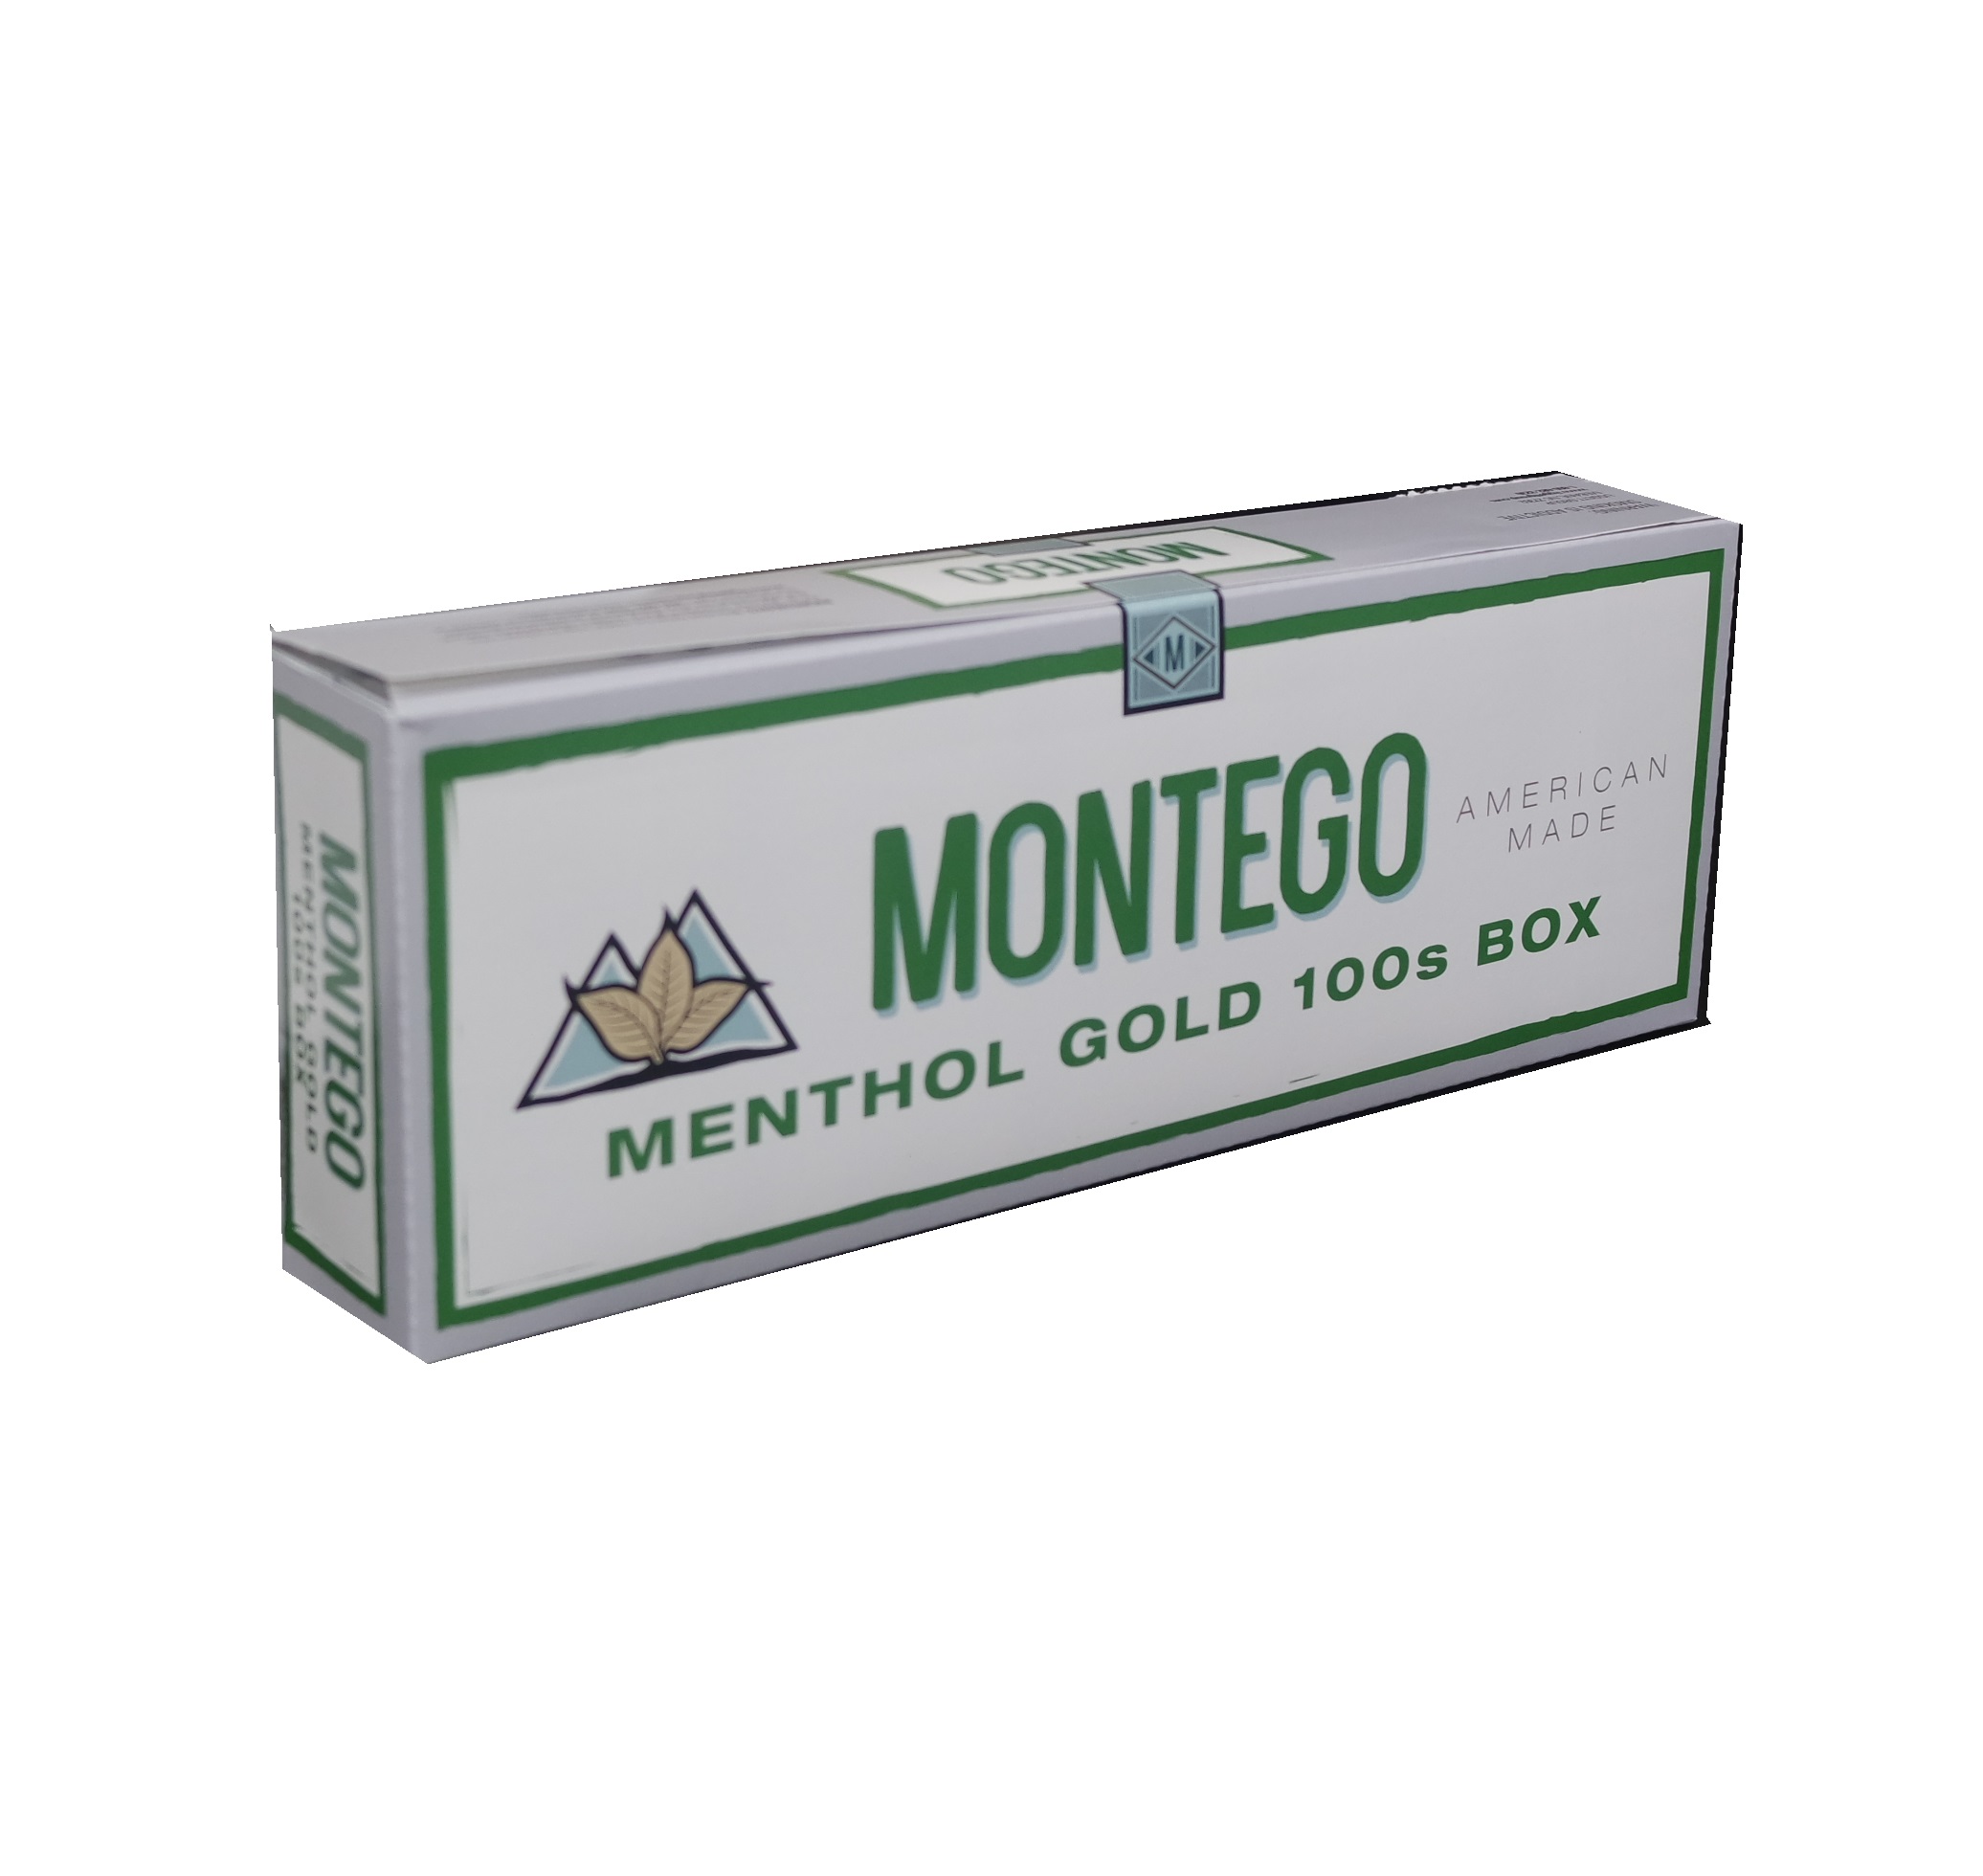 Montego menthol gold 100s box